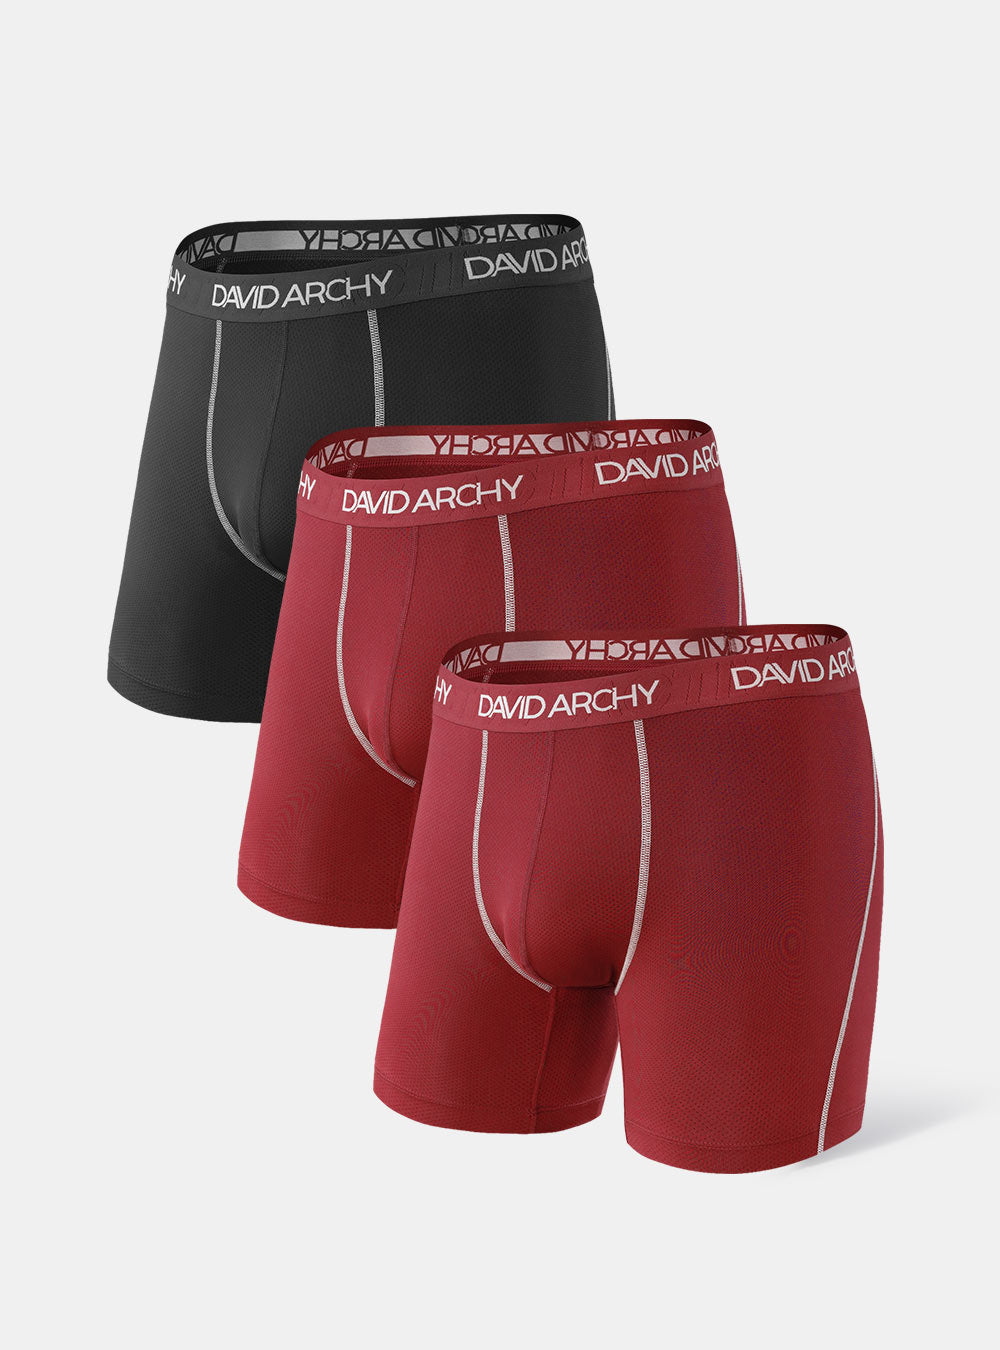 Mens Underwear Boxer Briefs, 3 Pack Boxers, 100% Soft Cotton, Open Fly  Comfort